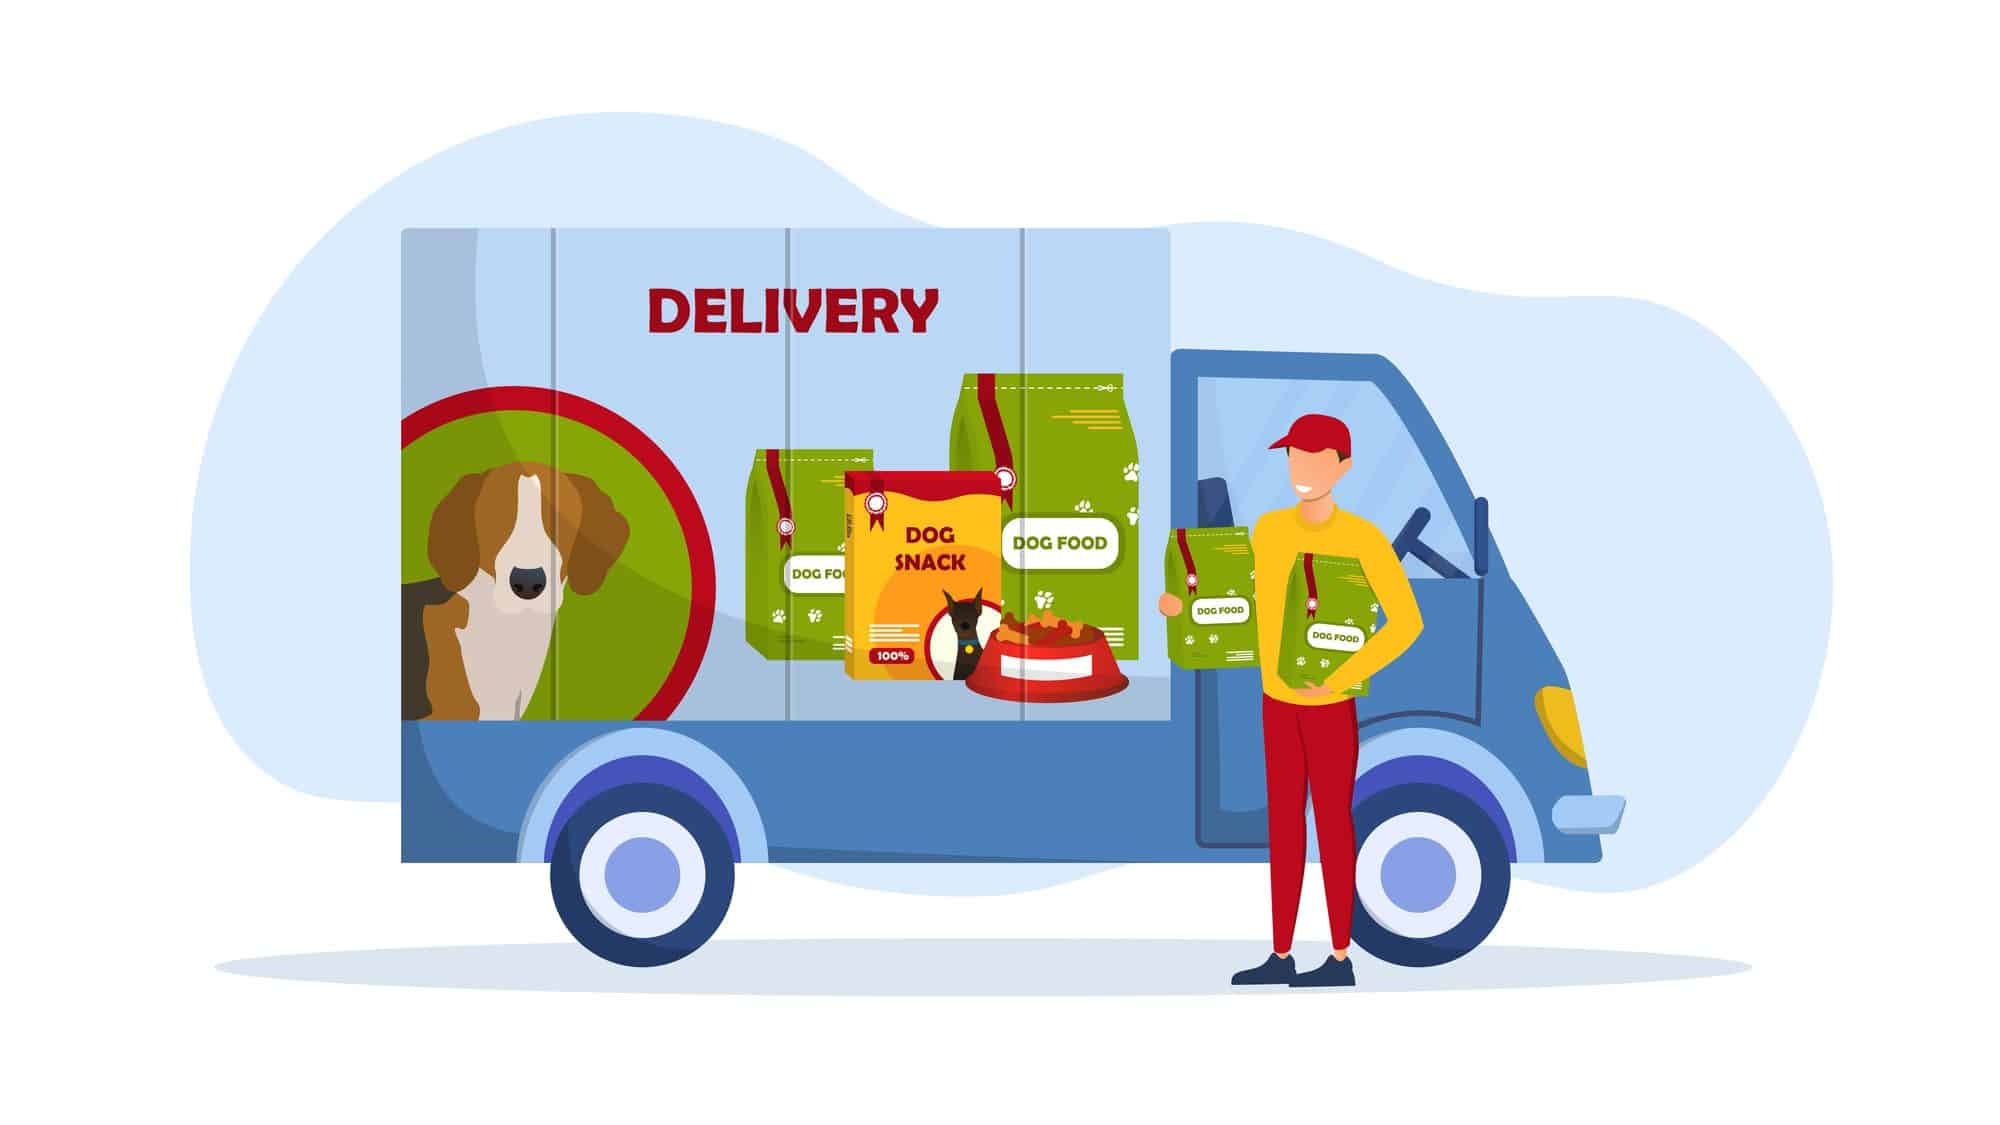 Smiling person courier delivering dog food. Delivery boy truck with dog snack design on side. Concept of dog food delivery service. Flat cartoon vector illustration